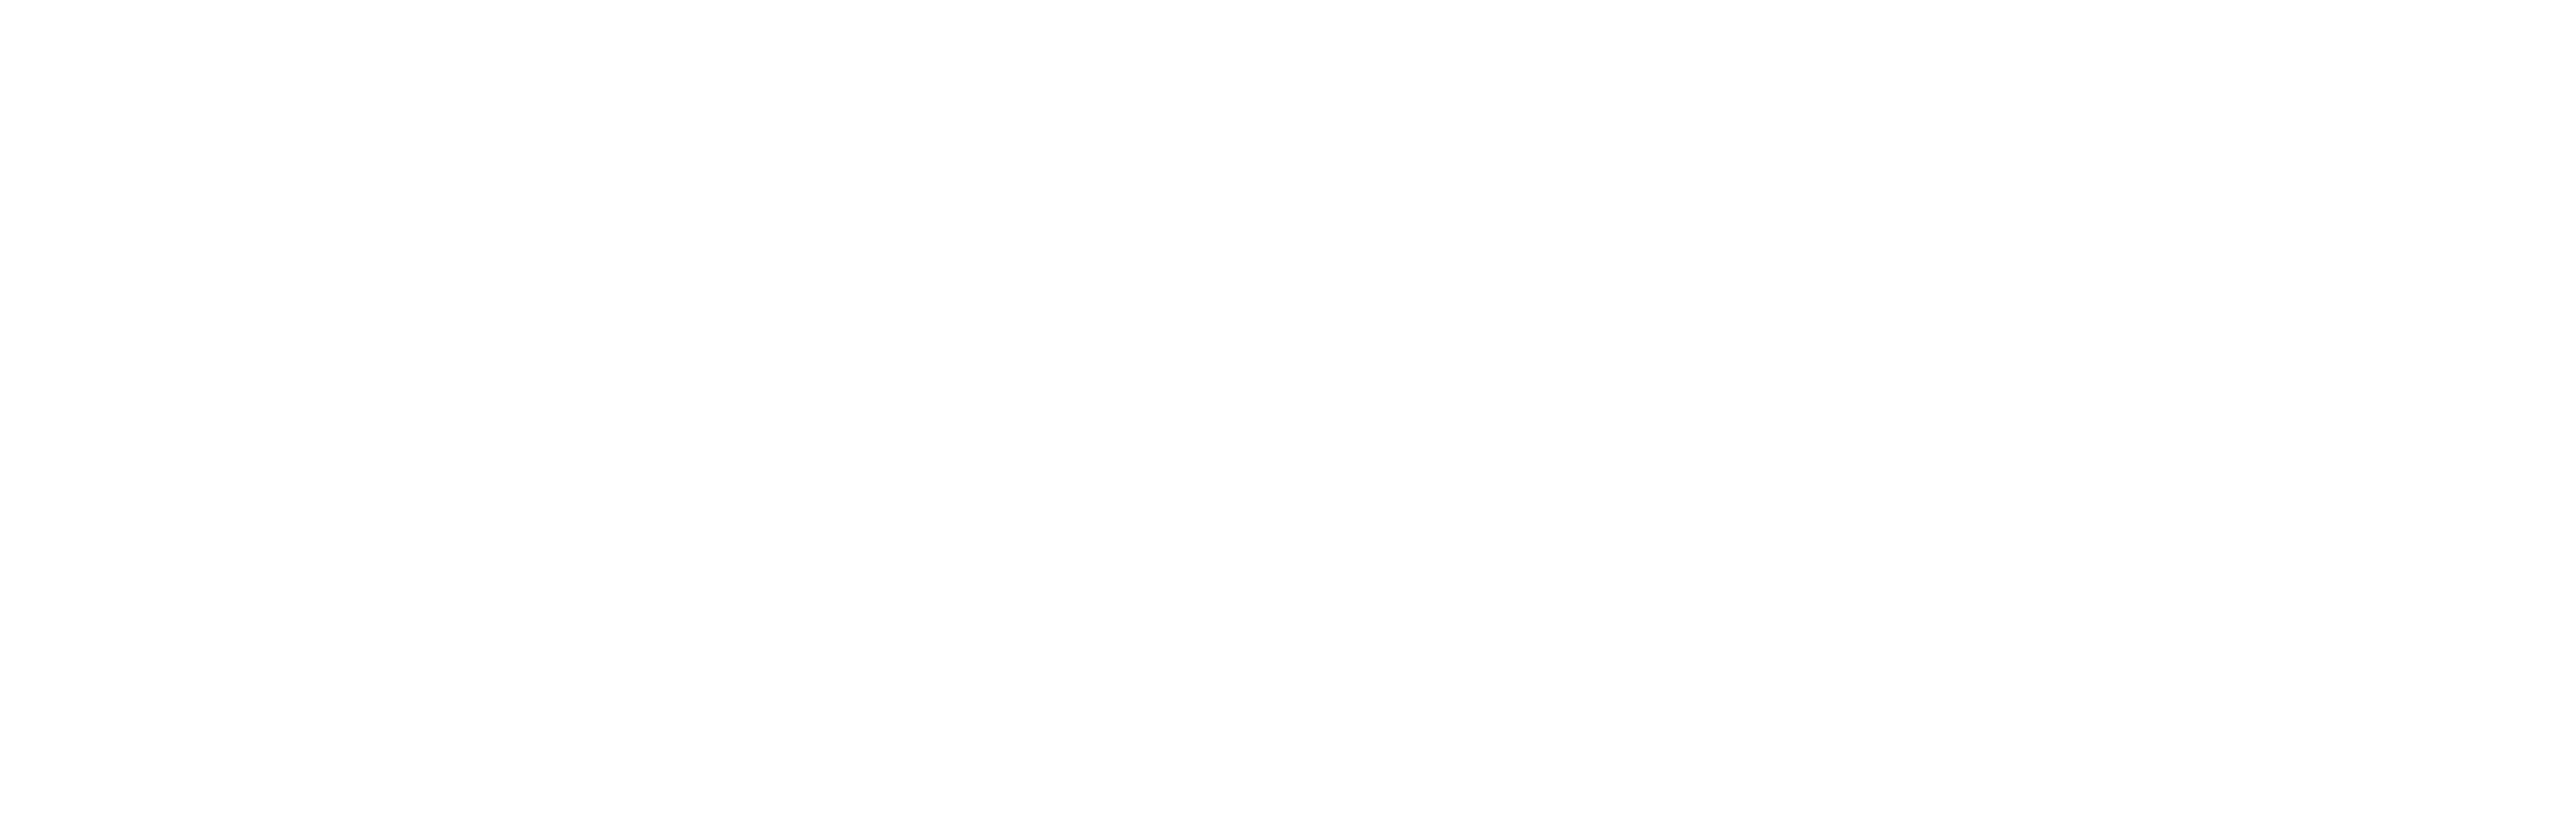 https://www.saastock.com/wp-content/uploads/2020/08/Twilio-logo.png